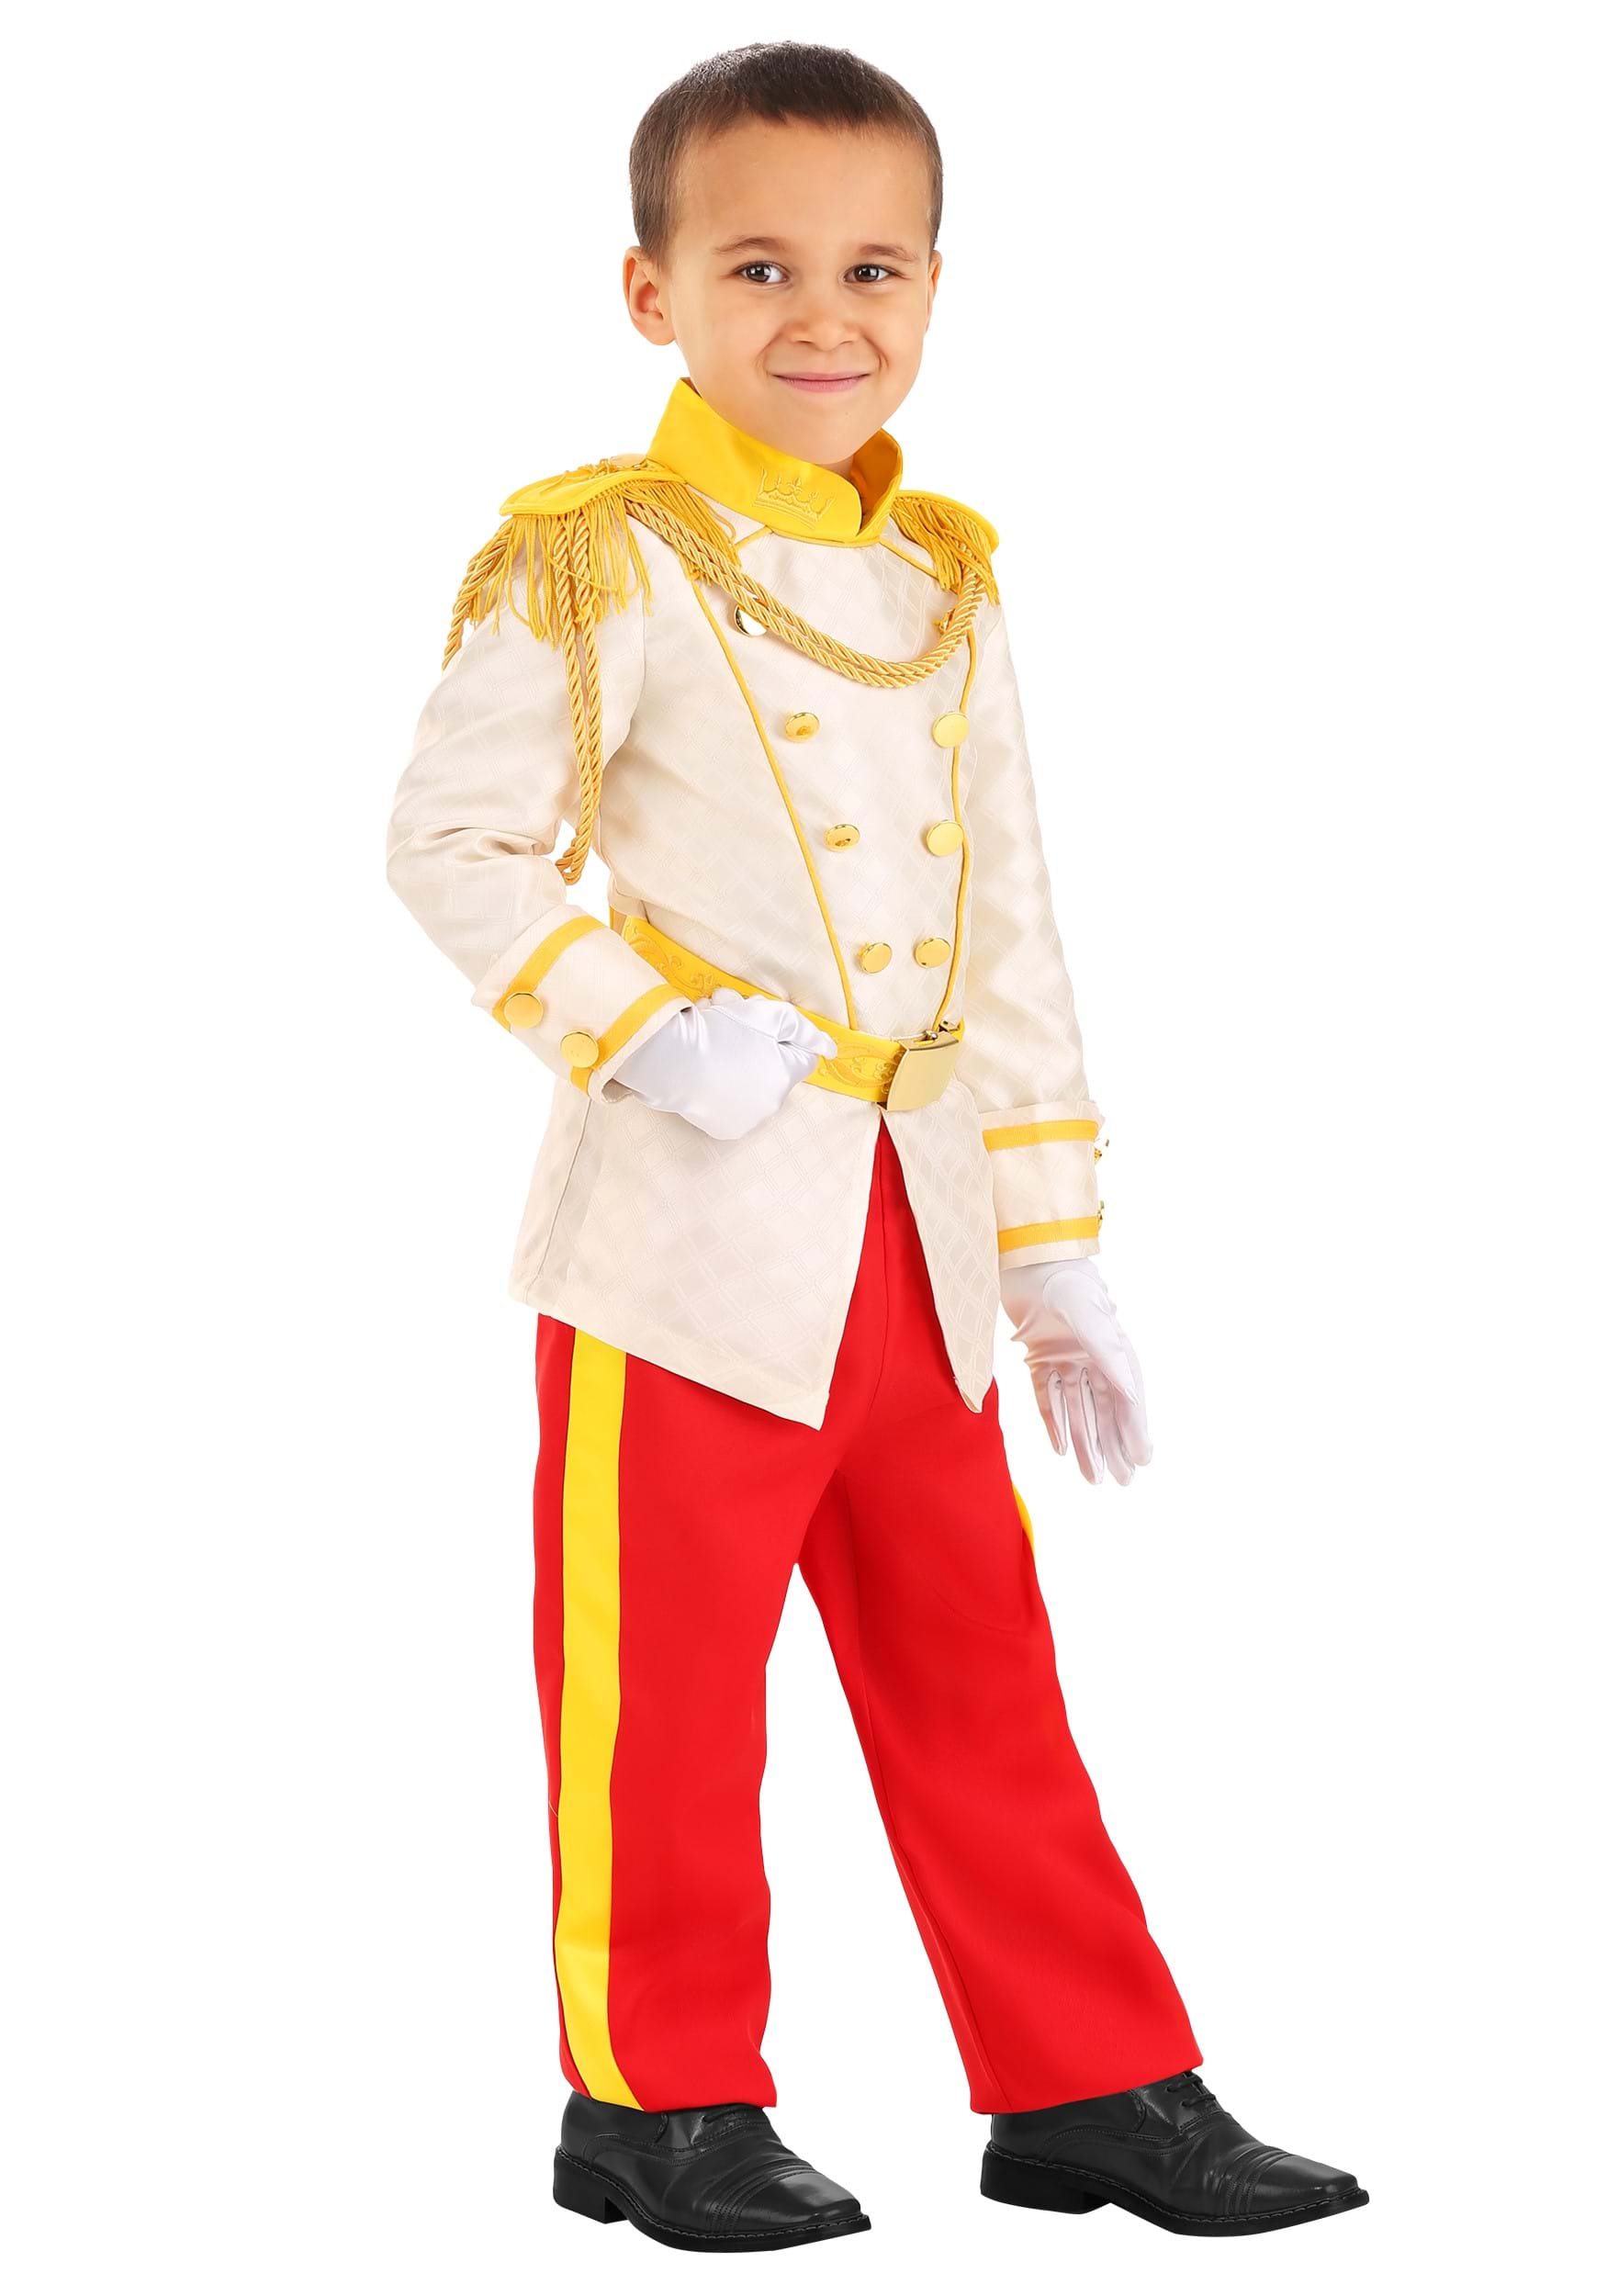 Cinderella Prince Charming Toddler Costume